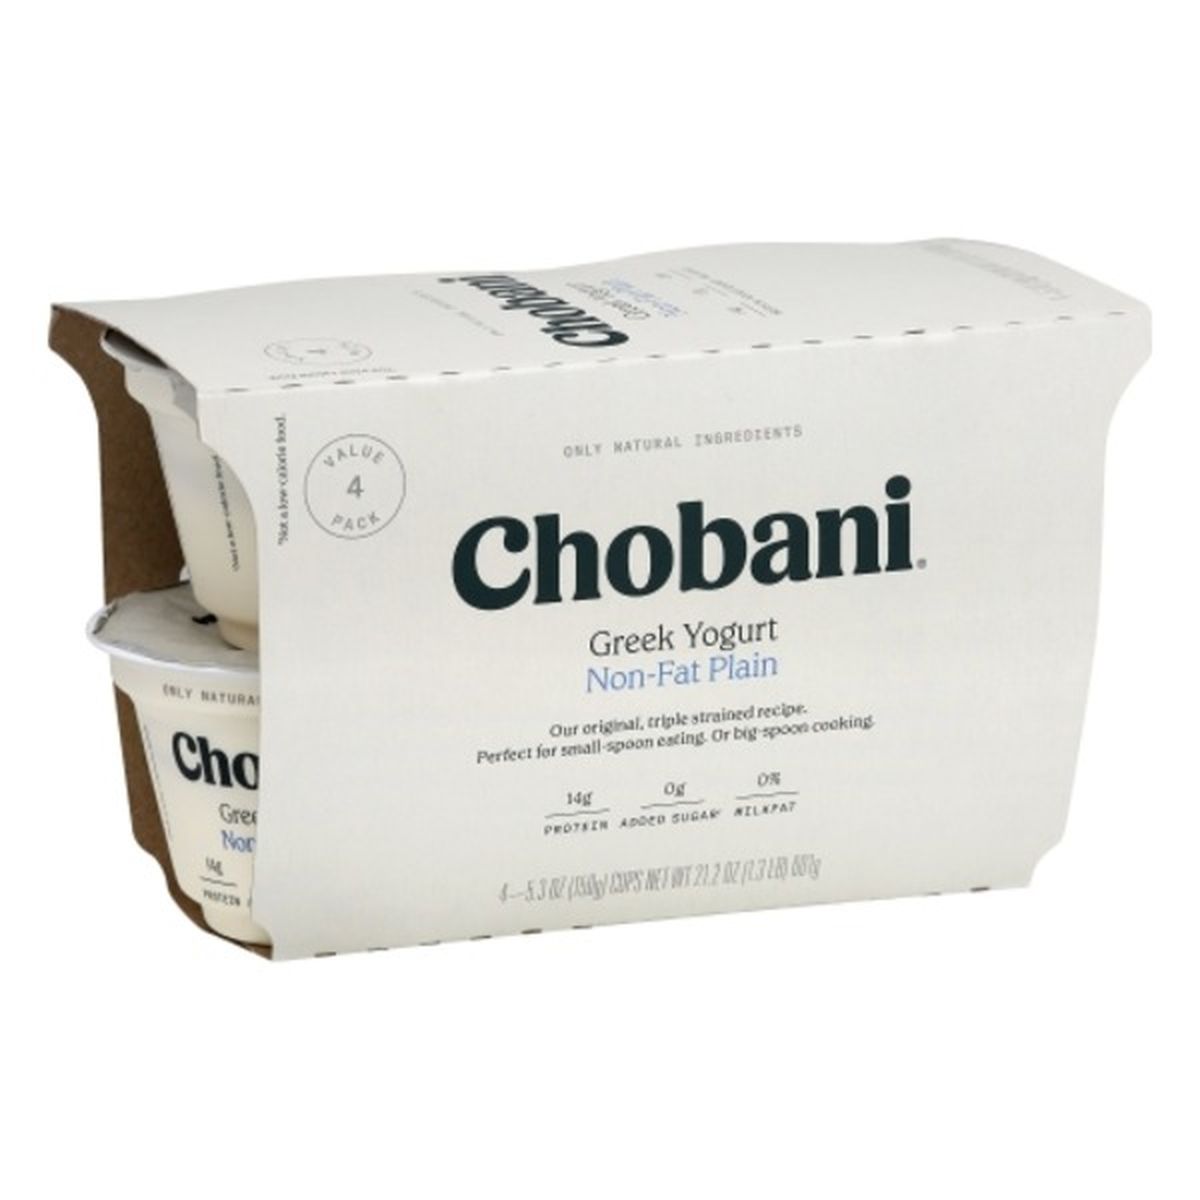 Calories in Chobani Yogurt, Greek, Non-Fat Plain, Value 4 Pack